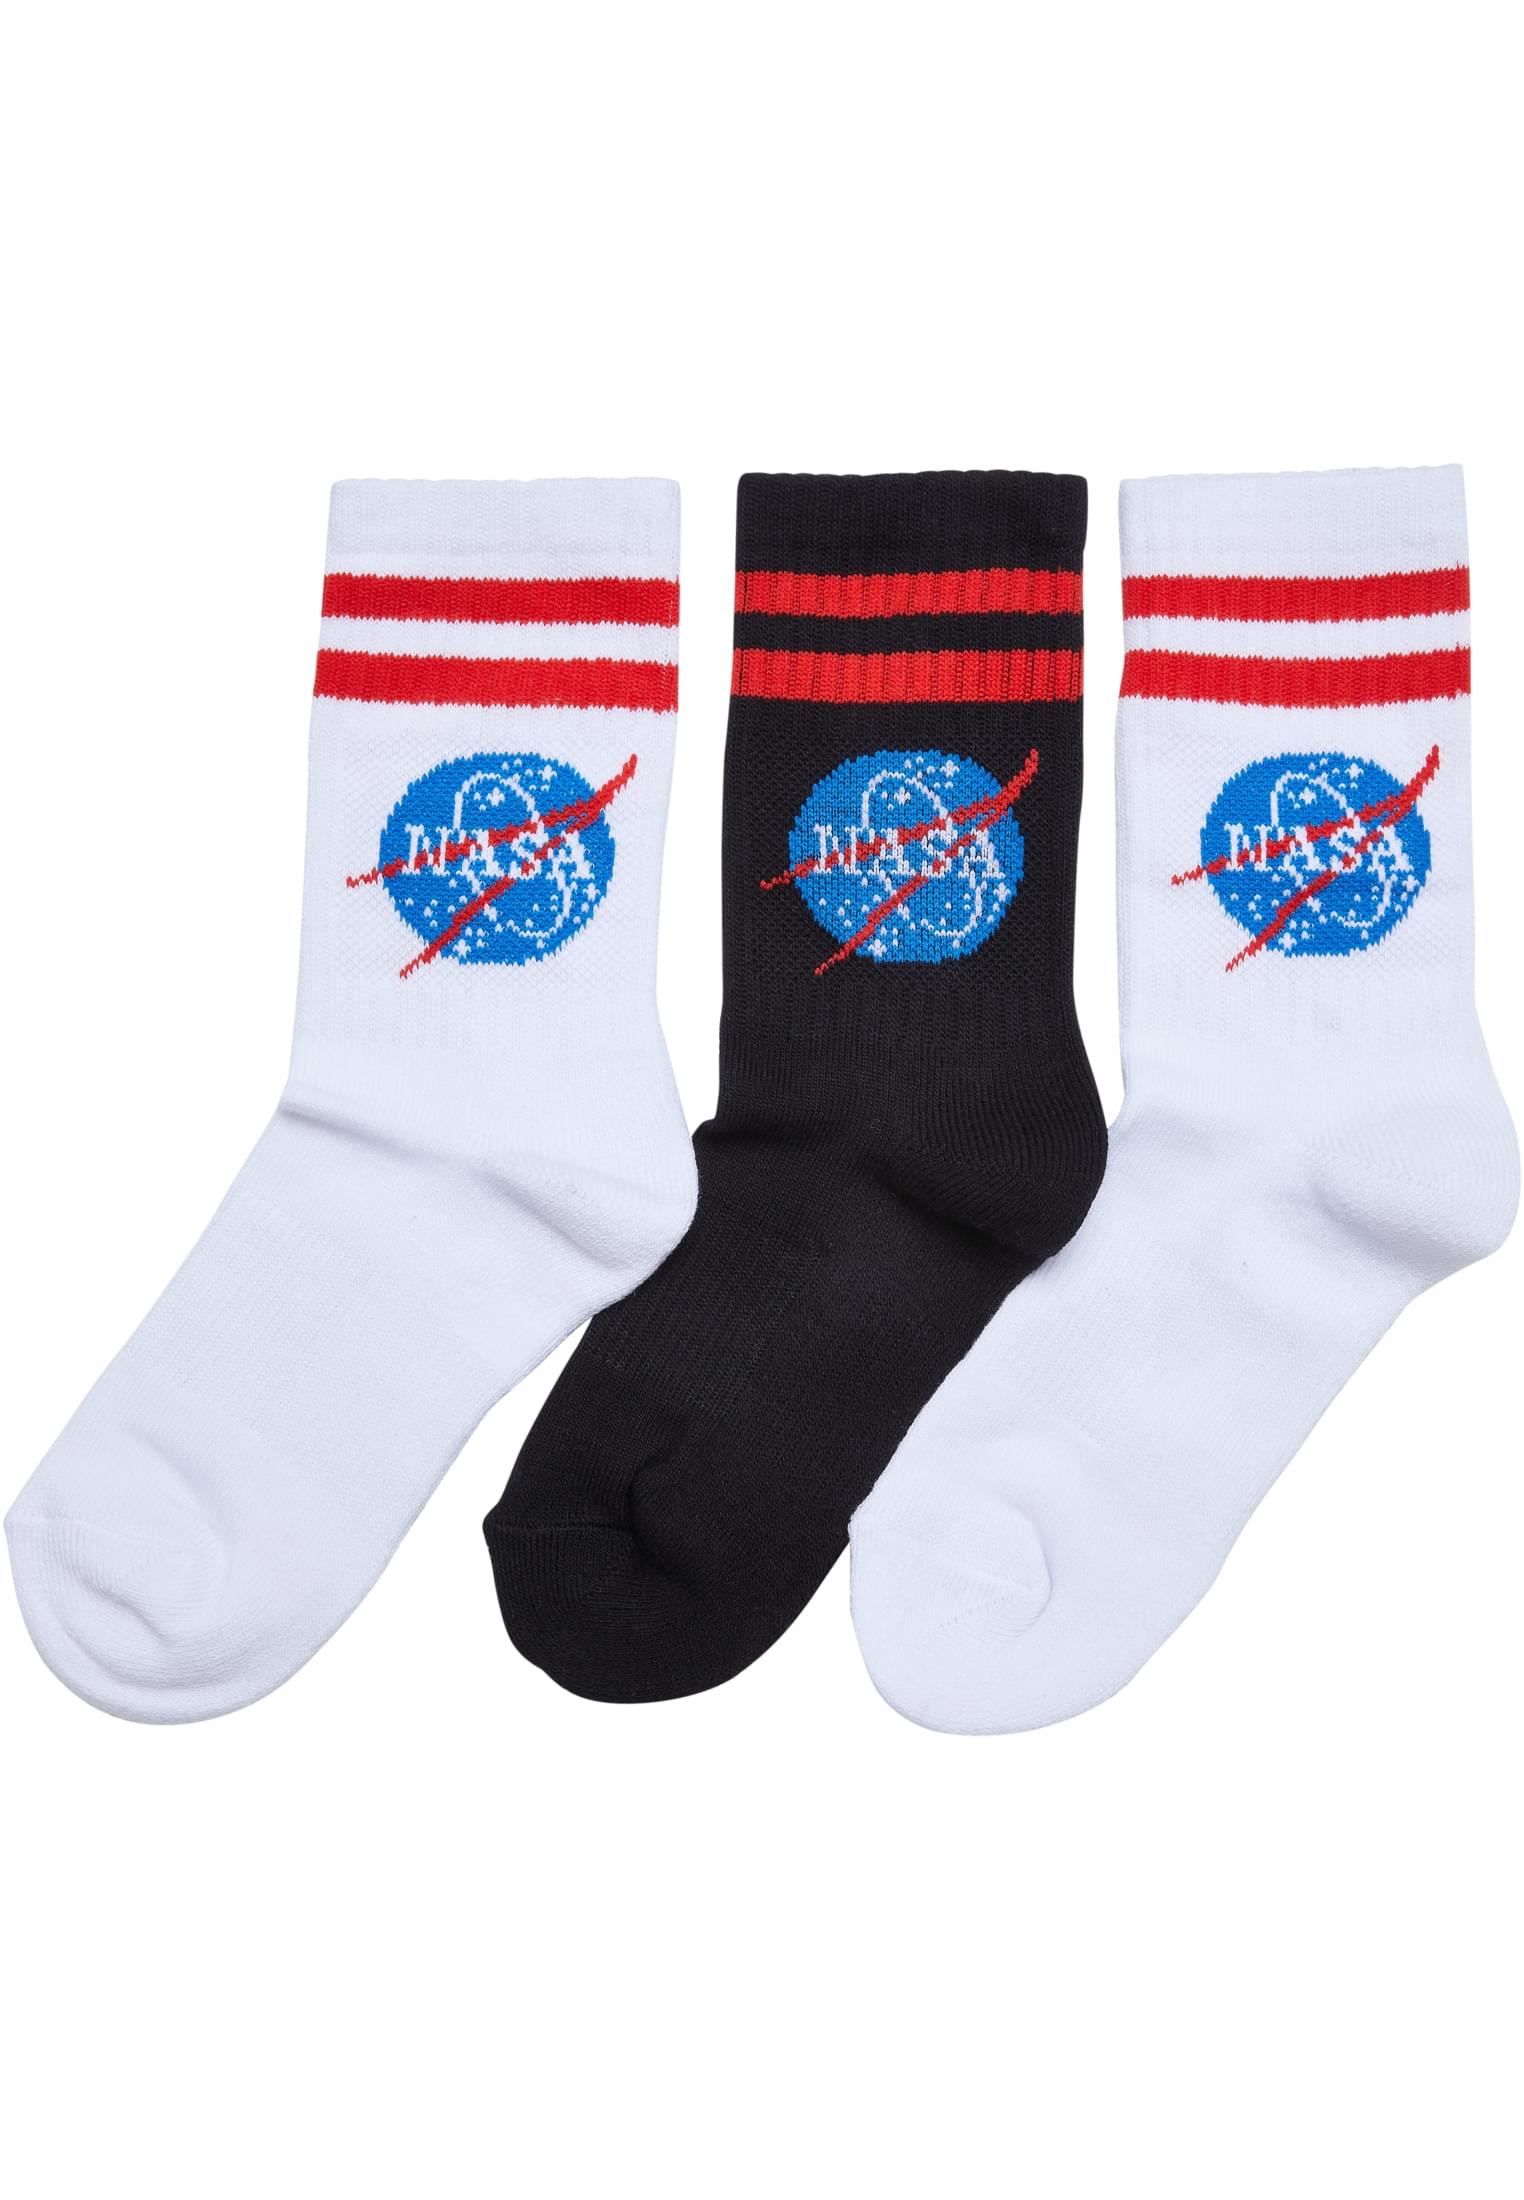 NASA Insignia Kids 3-Pack Socks White/Black